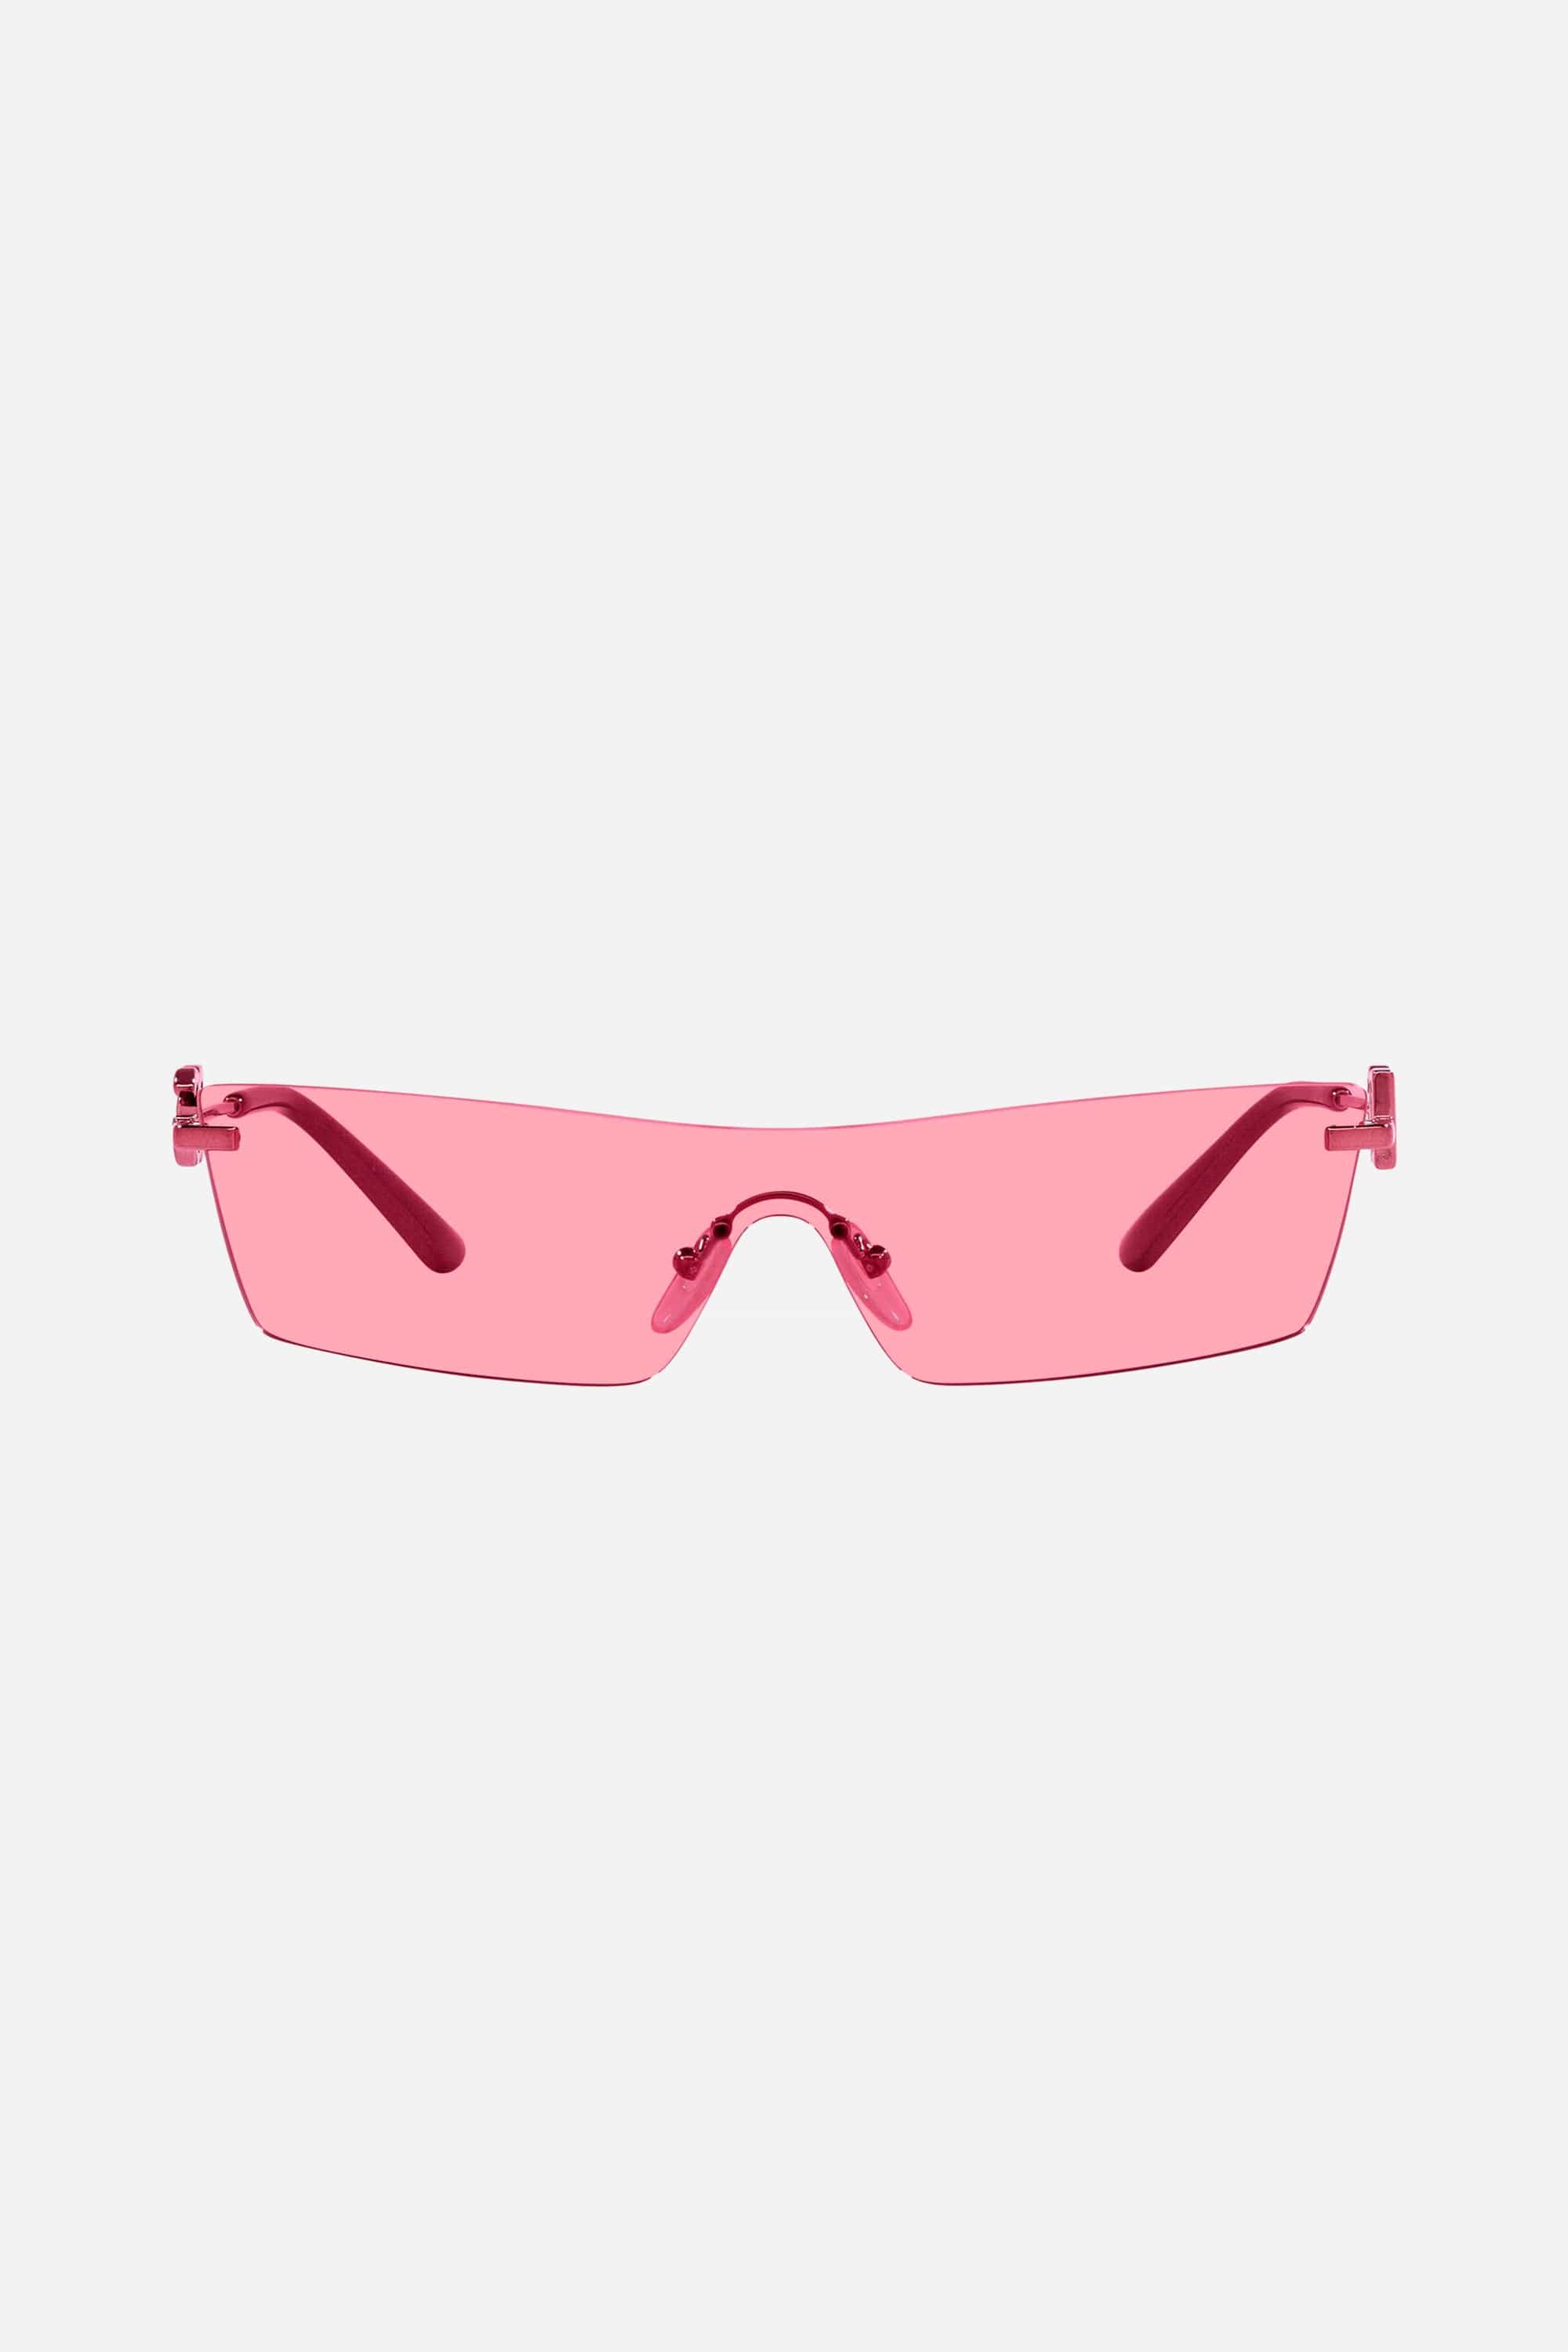 Dolce&Gabbana rimless pink sunglasses - Eyewear Club